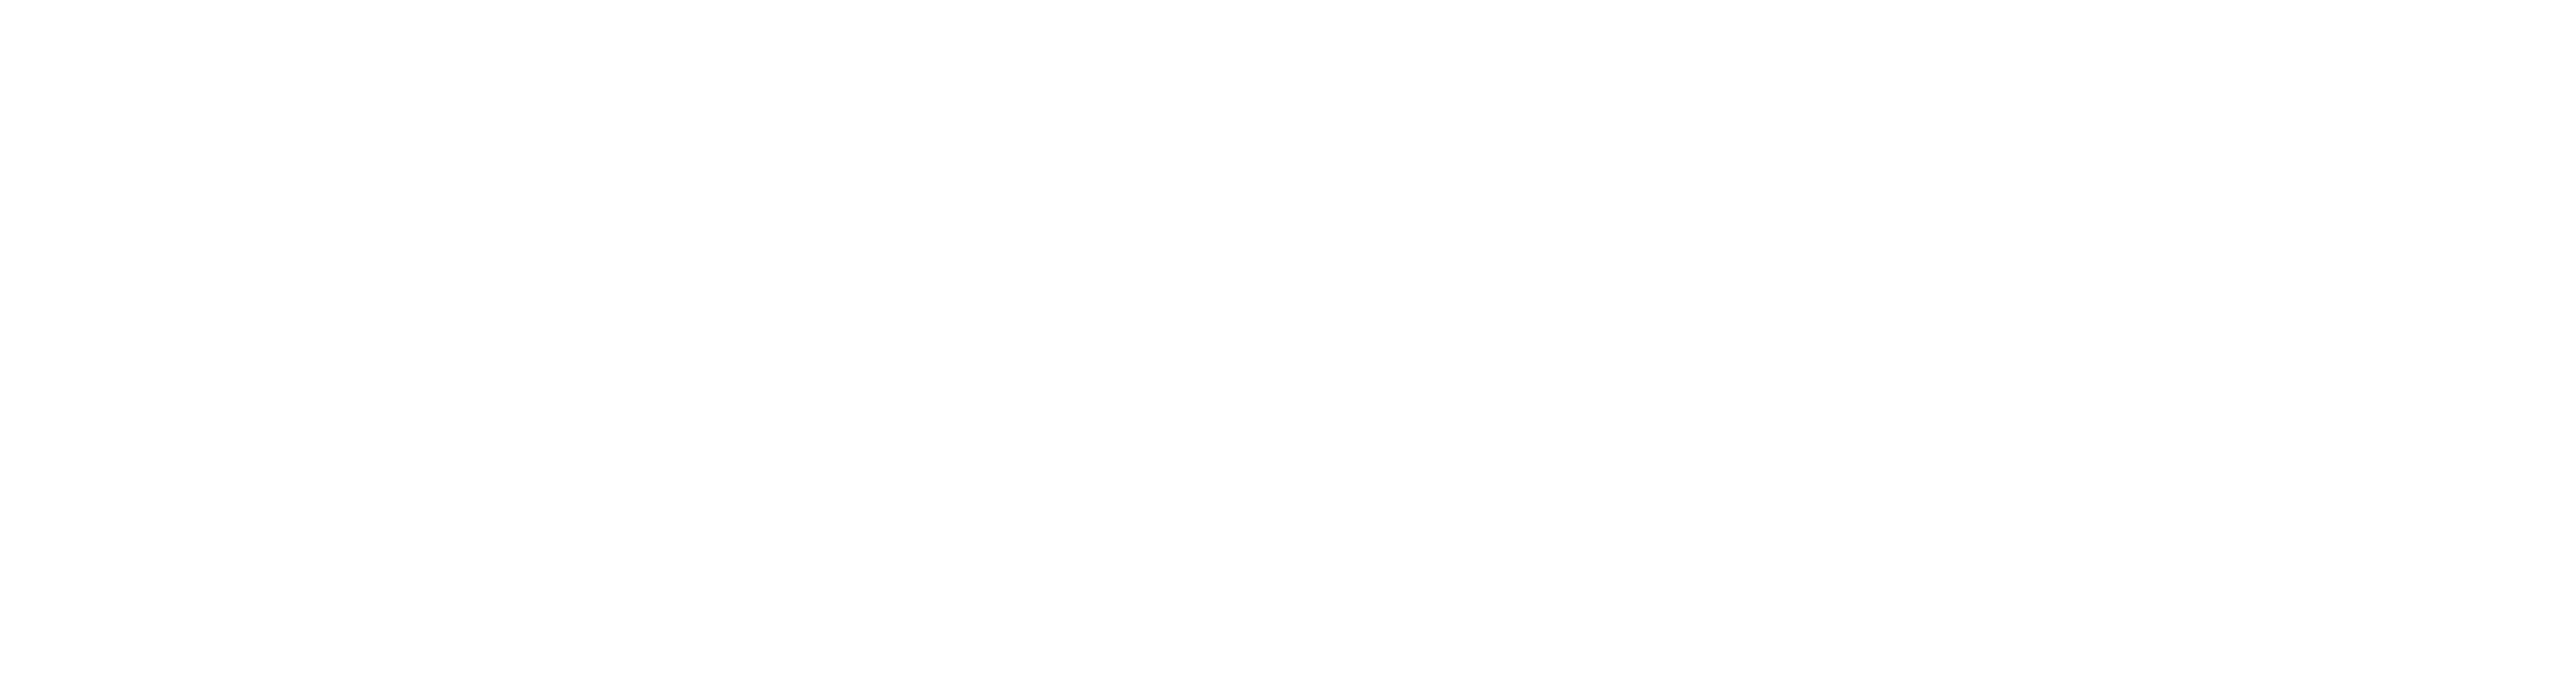 Kenneth S. Zimmerman, MD logo white